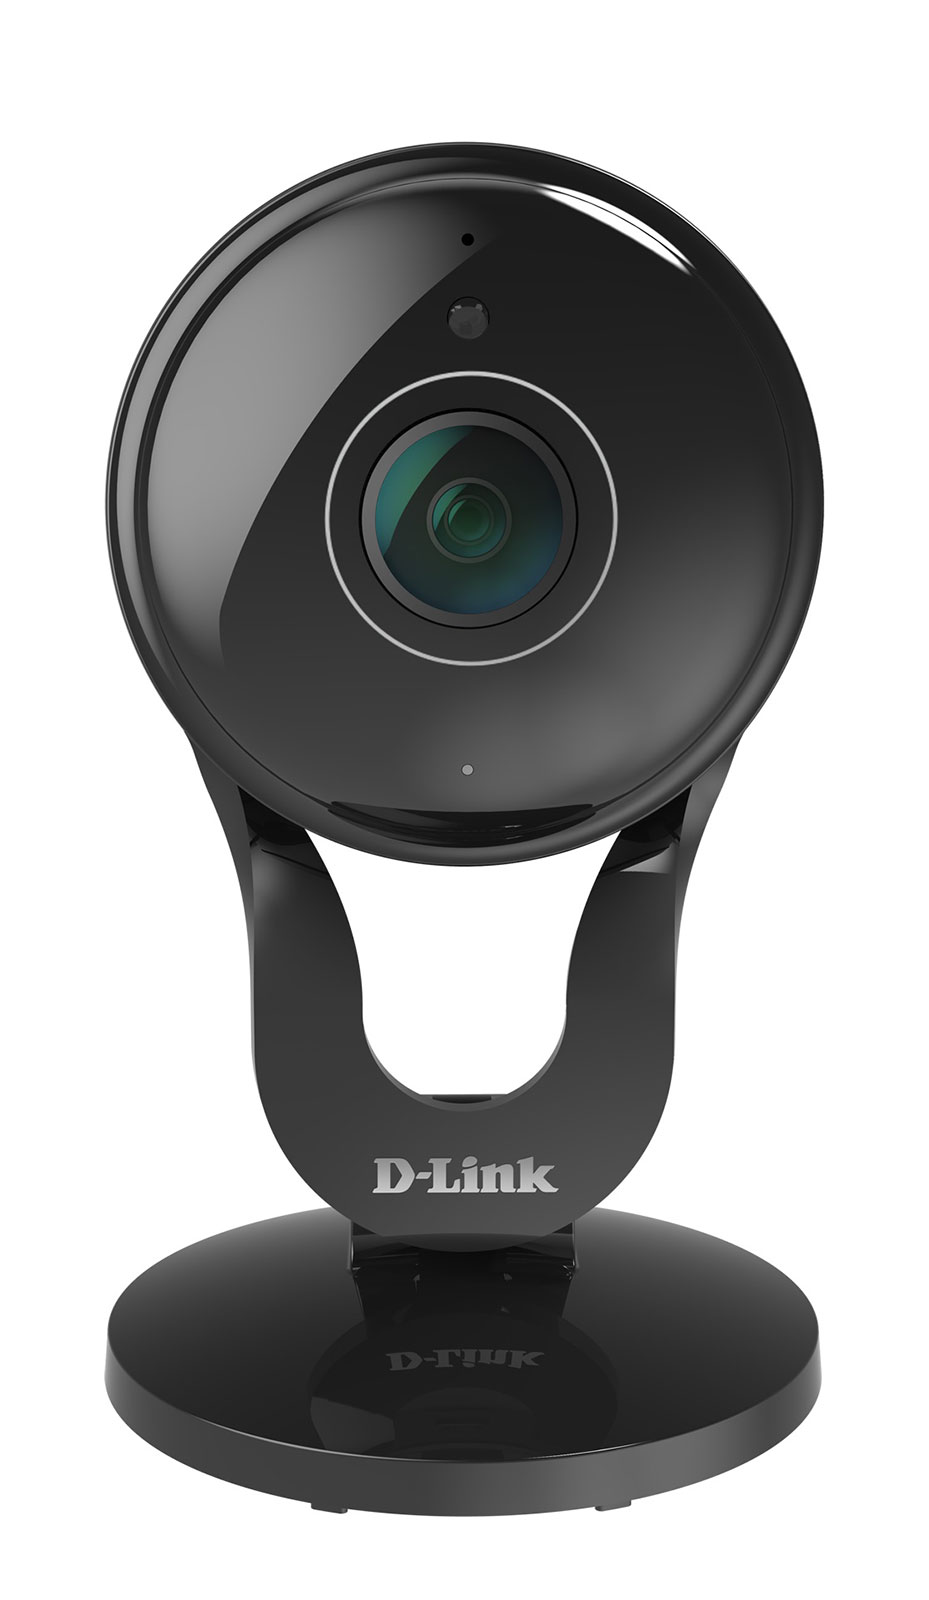 D-Link Wide Eye Full HD 180° Panoramic Camera DCS-2530L